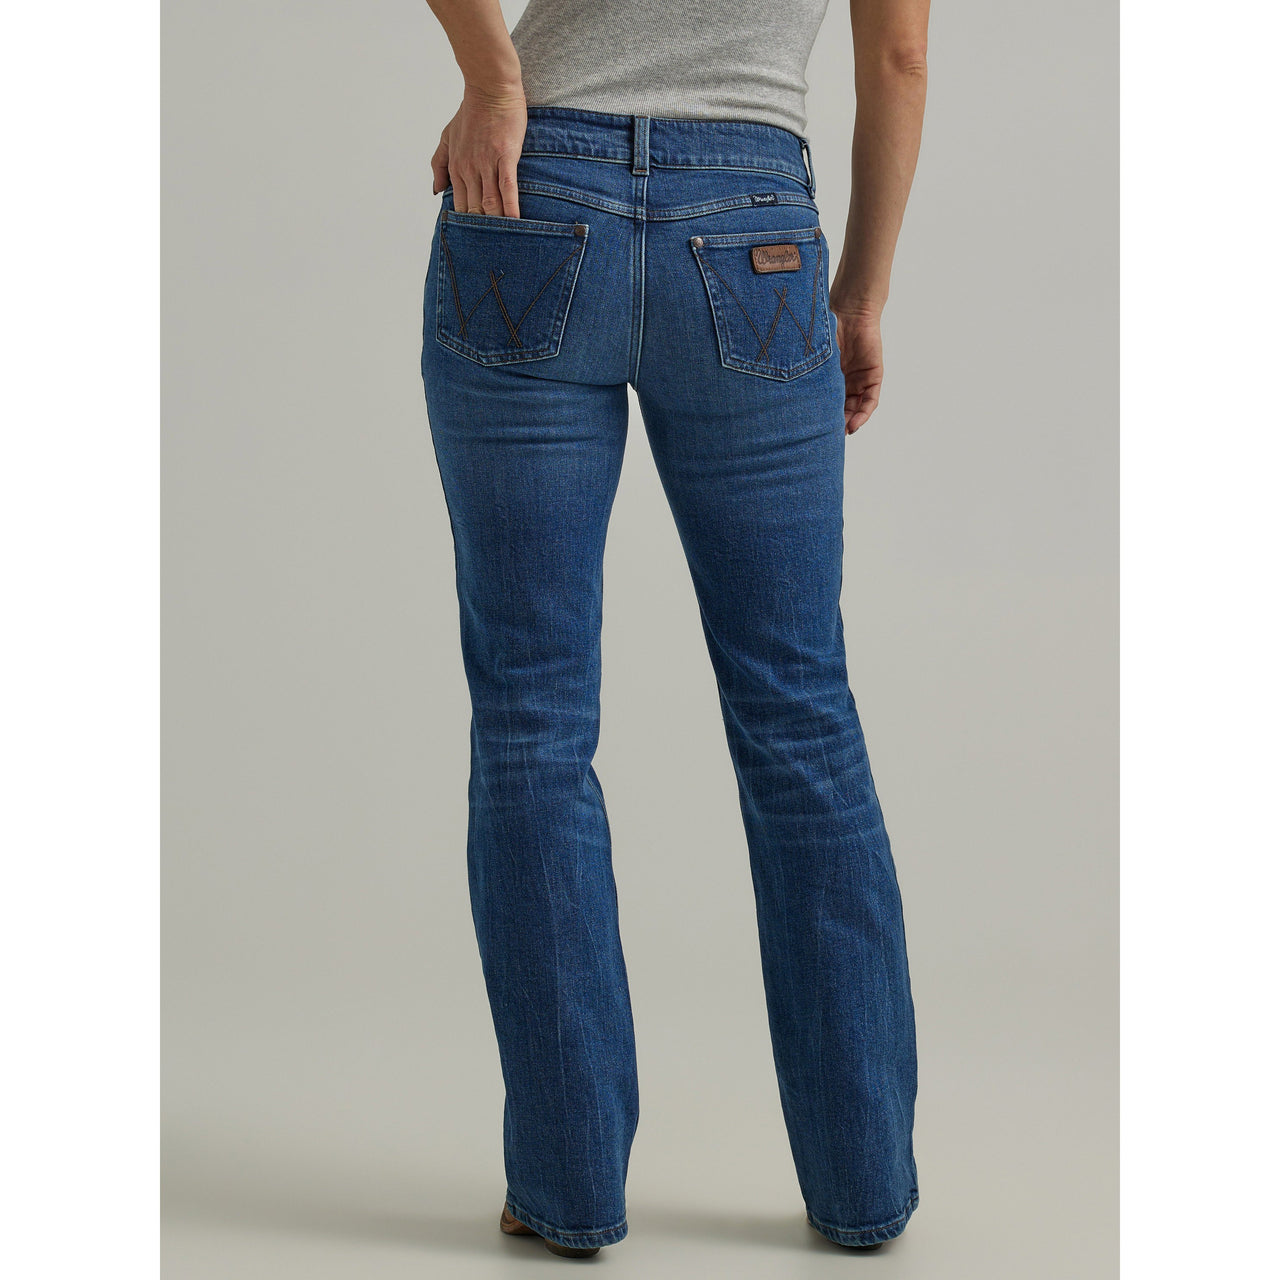 Wrangler Women's Retro Mae Mid Rise Bootcut Jeans - Isabela